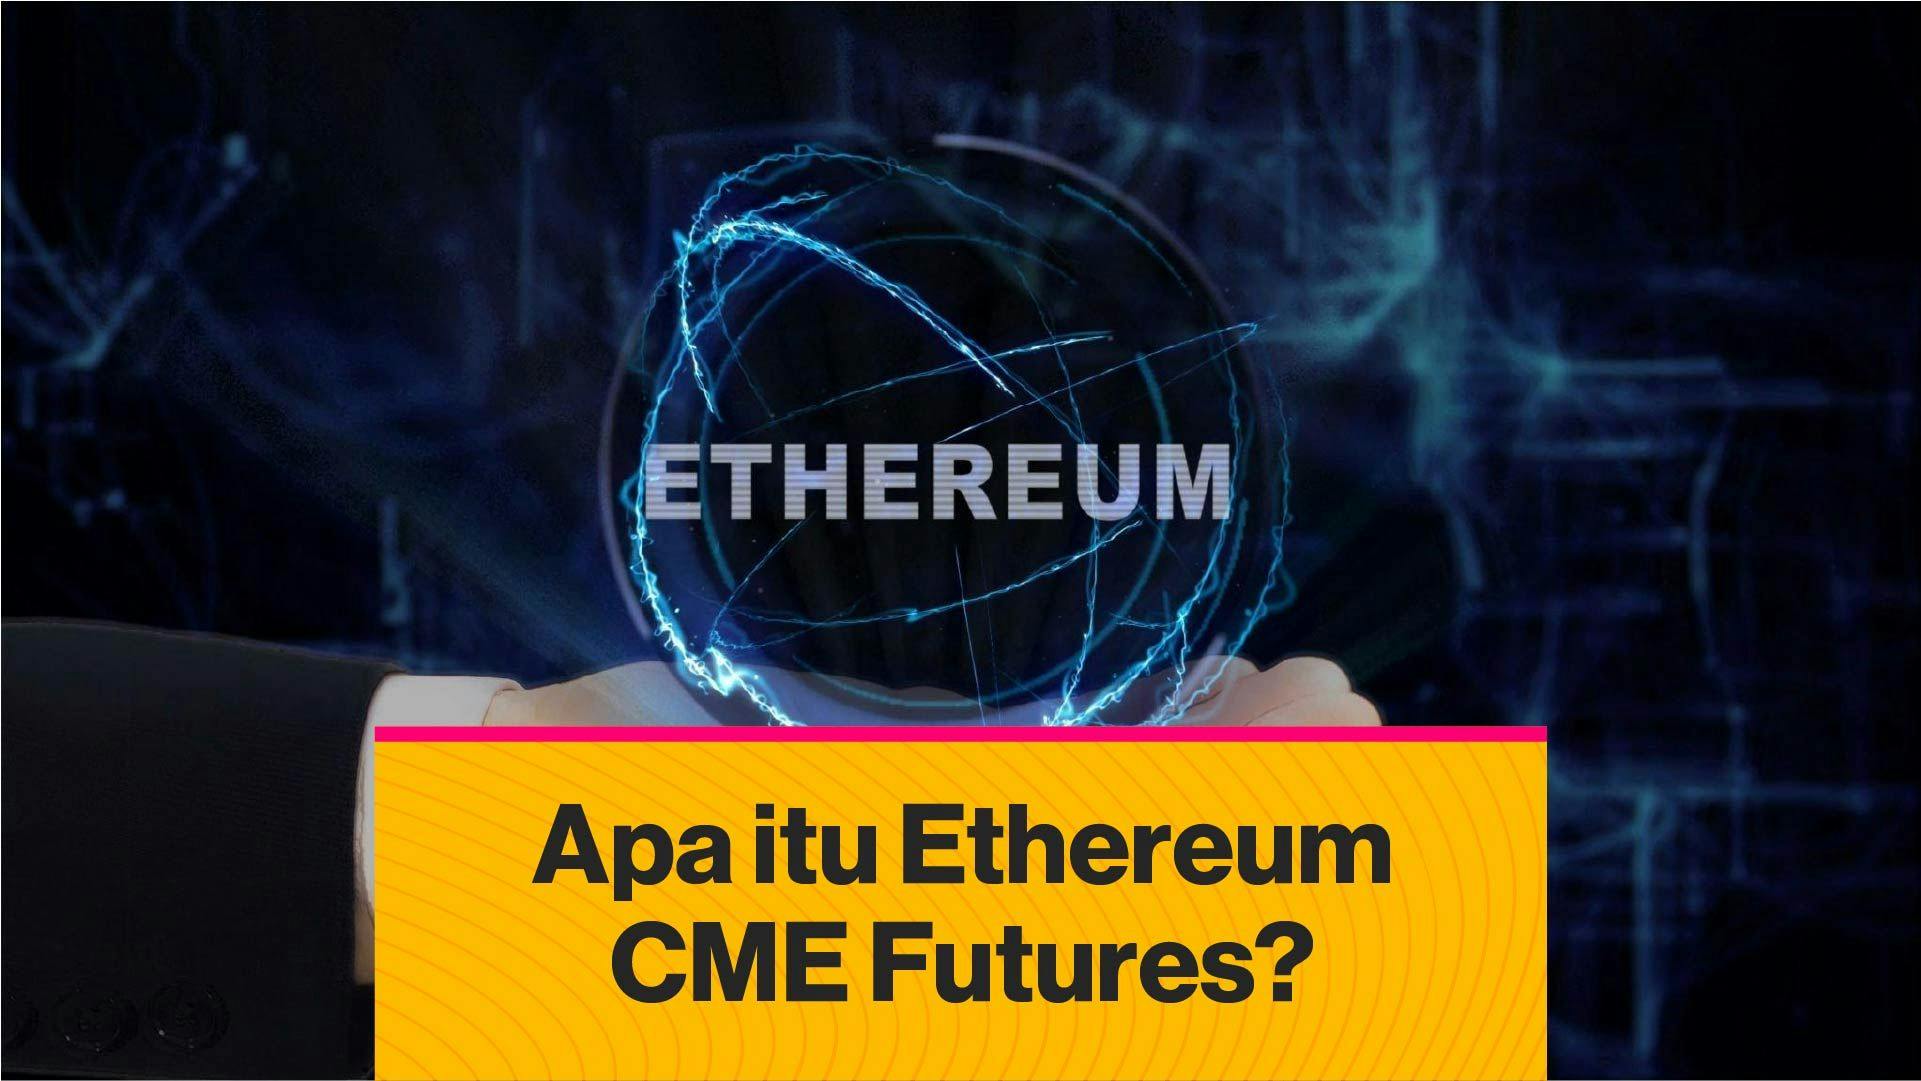 Apa itu Ethereum CME Futures? (Coindesk Indonesia)